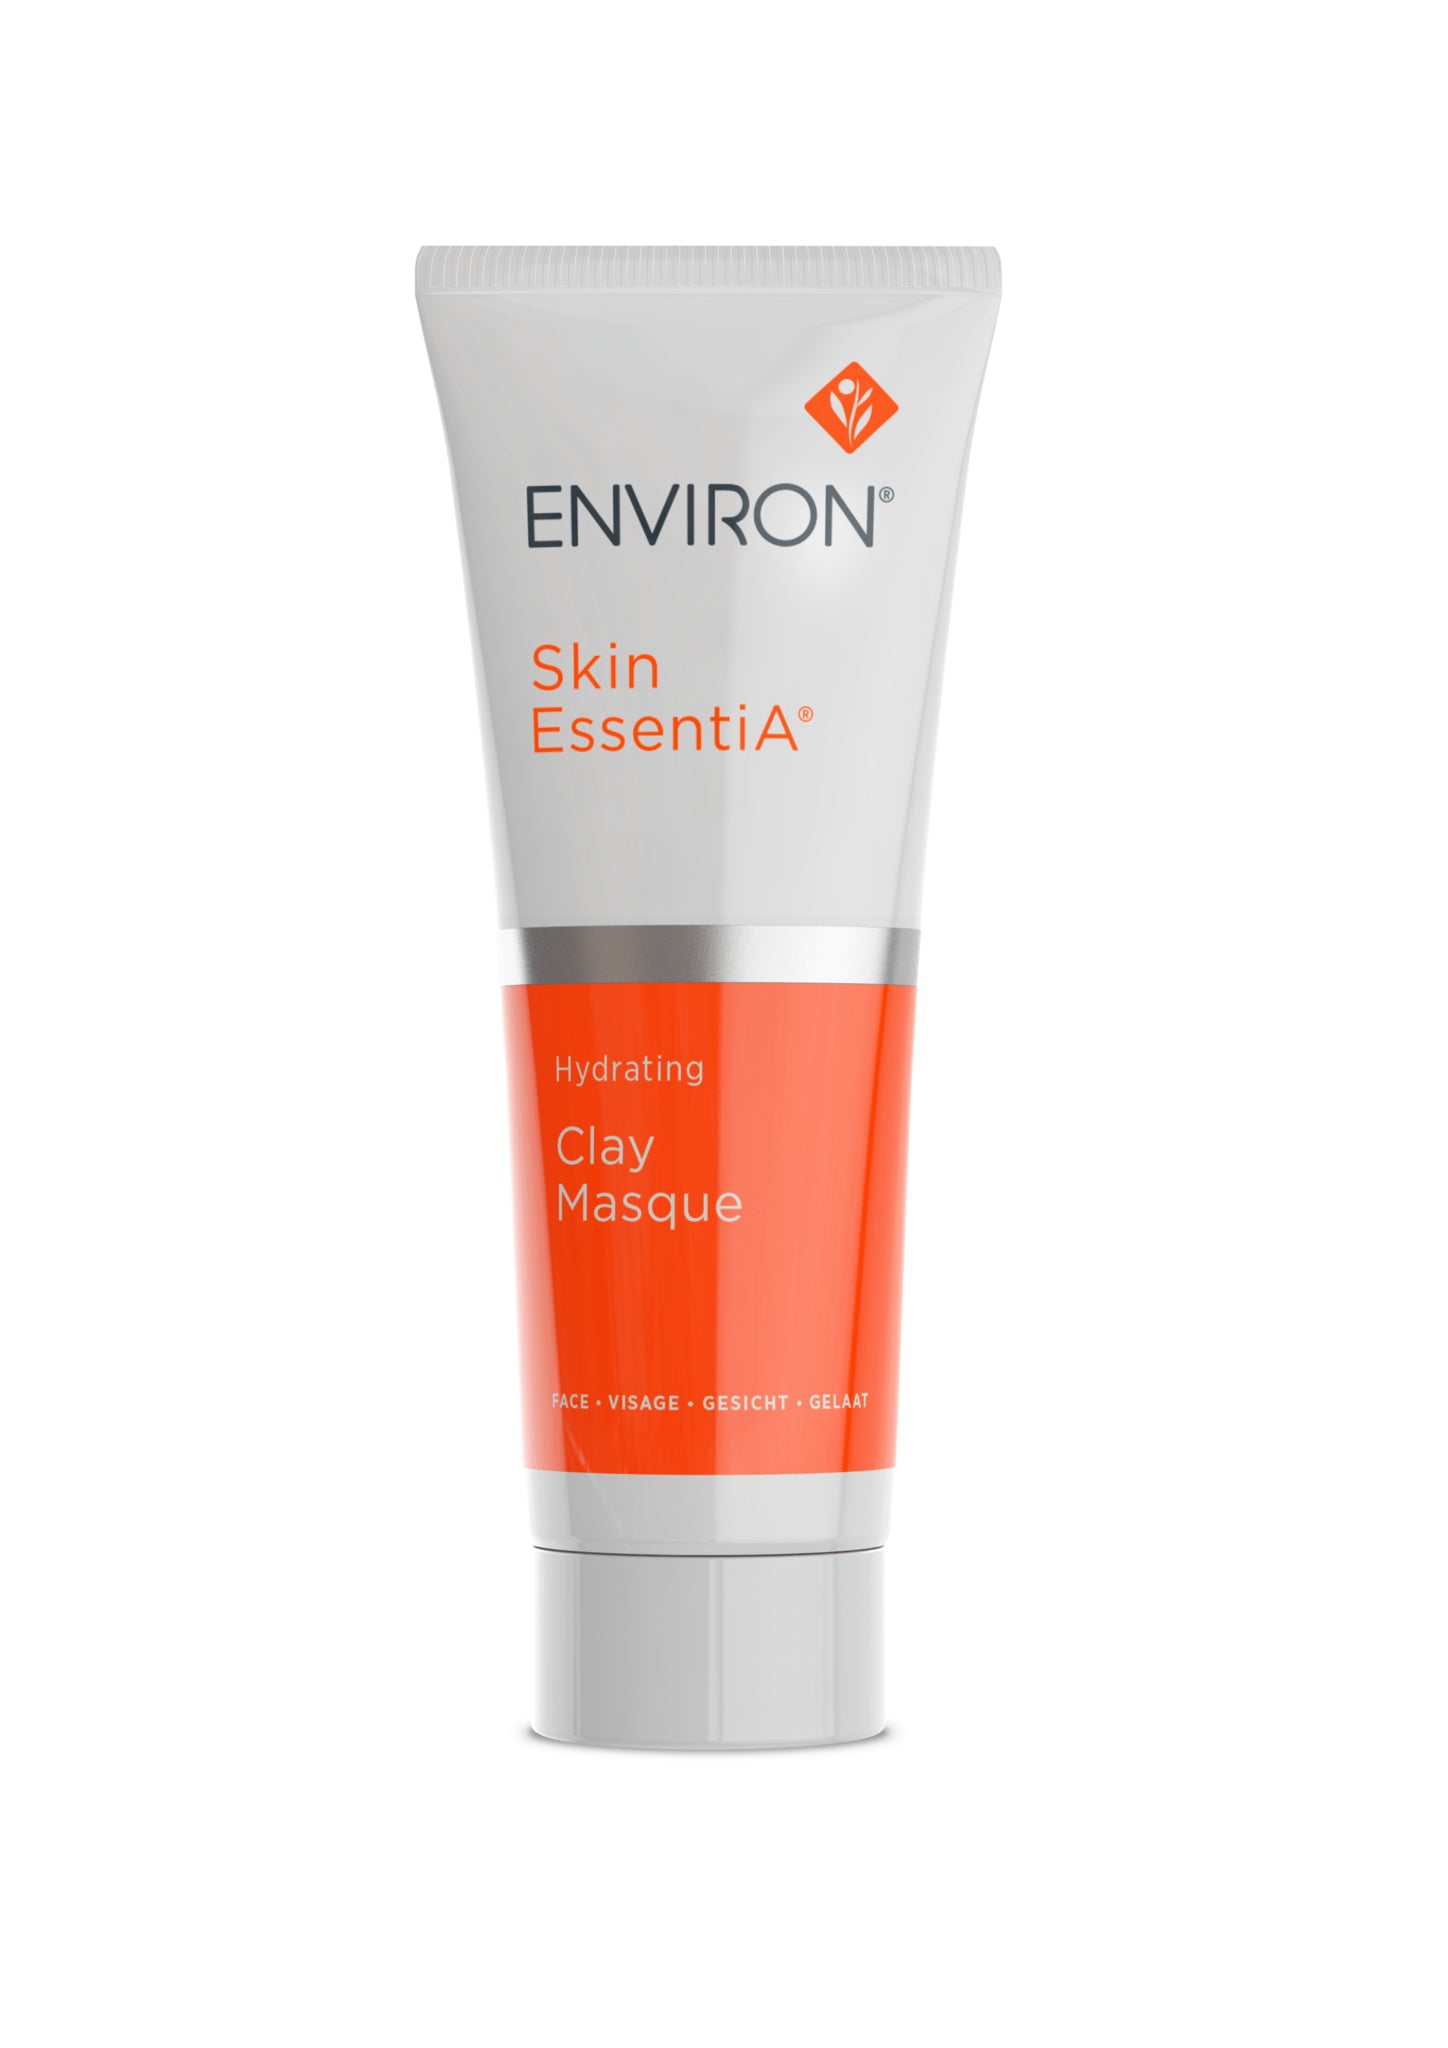 Environ Skin EssentiA® range - Hydrating Clay Masque